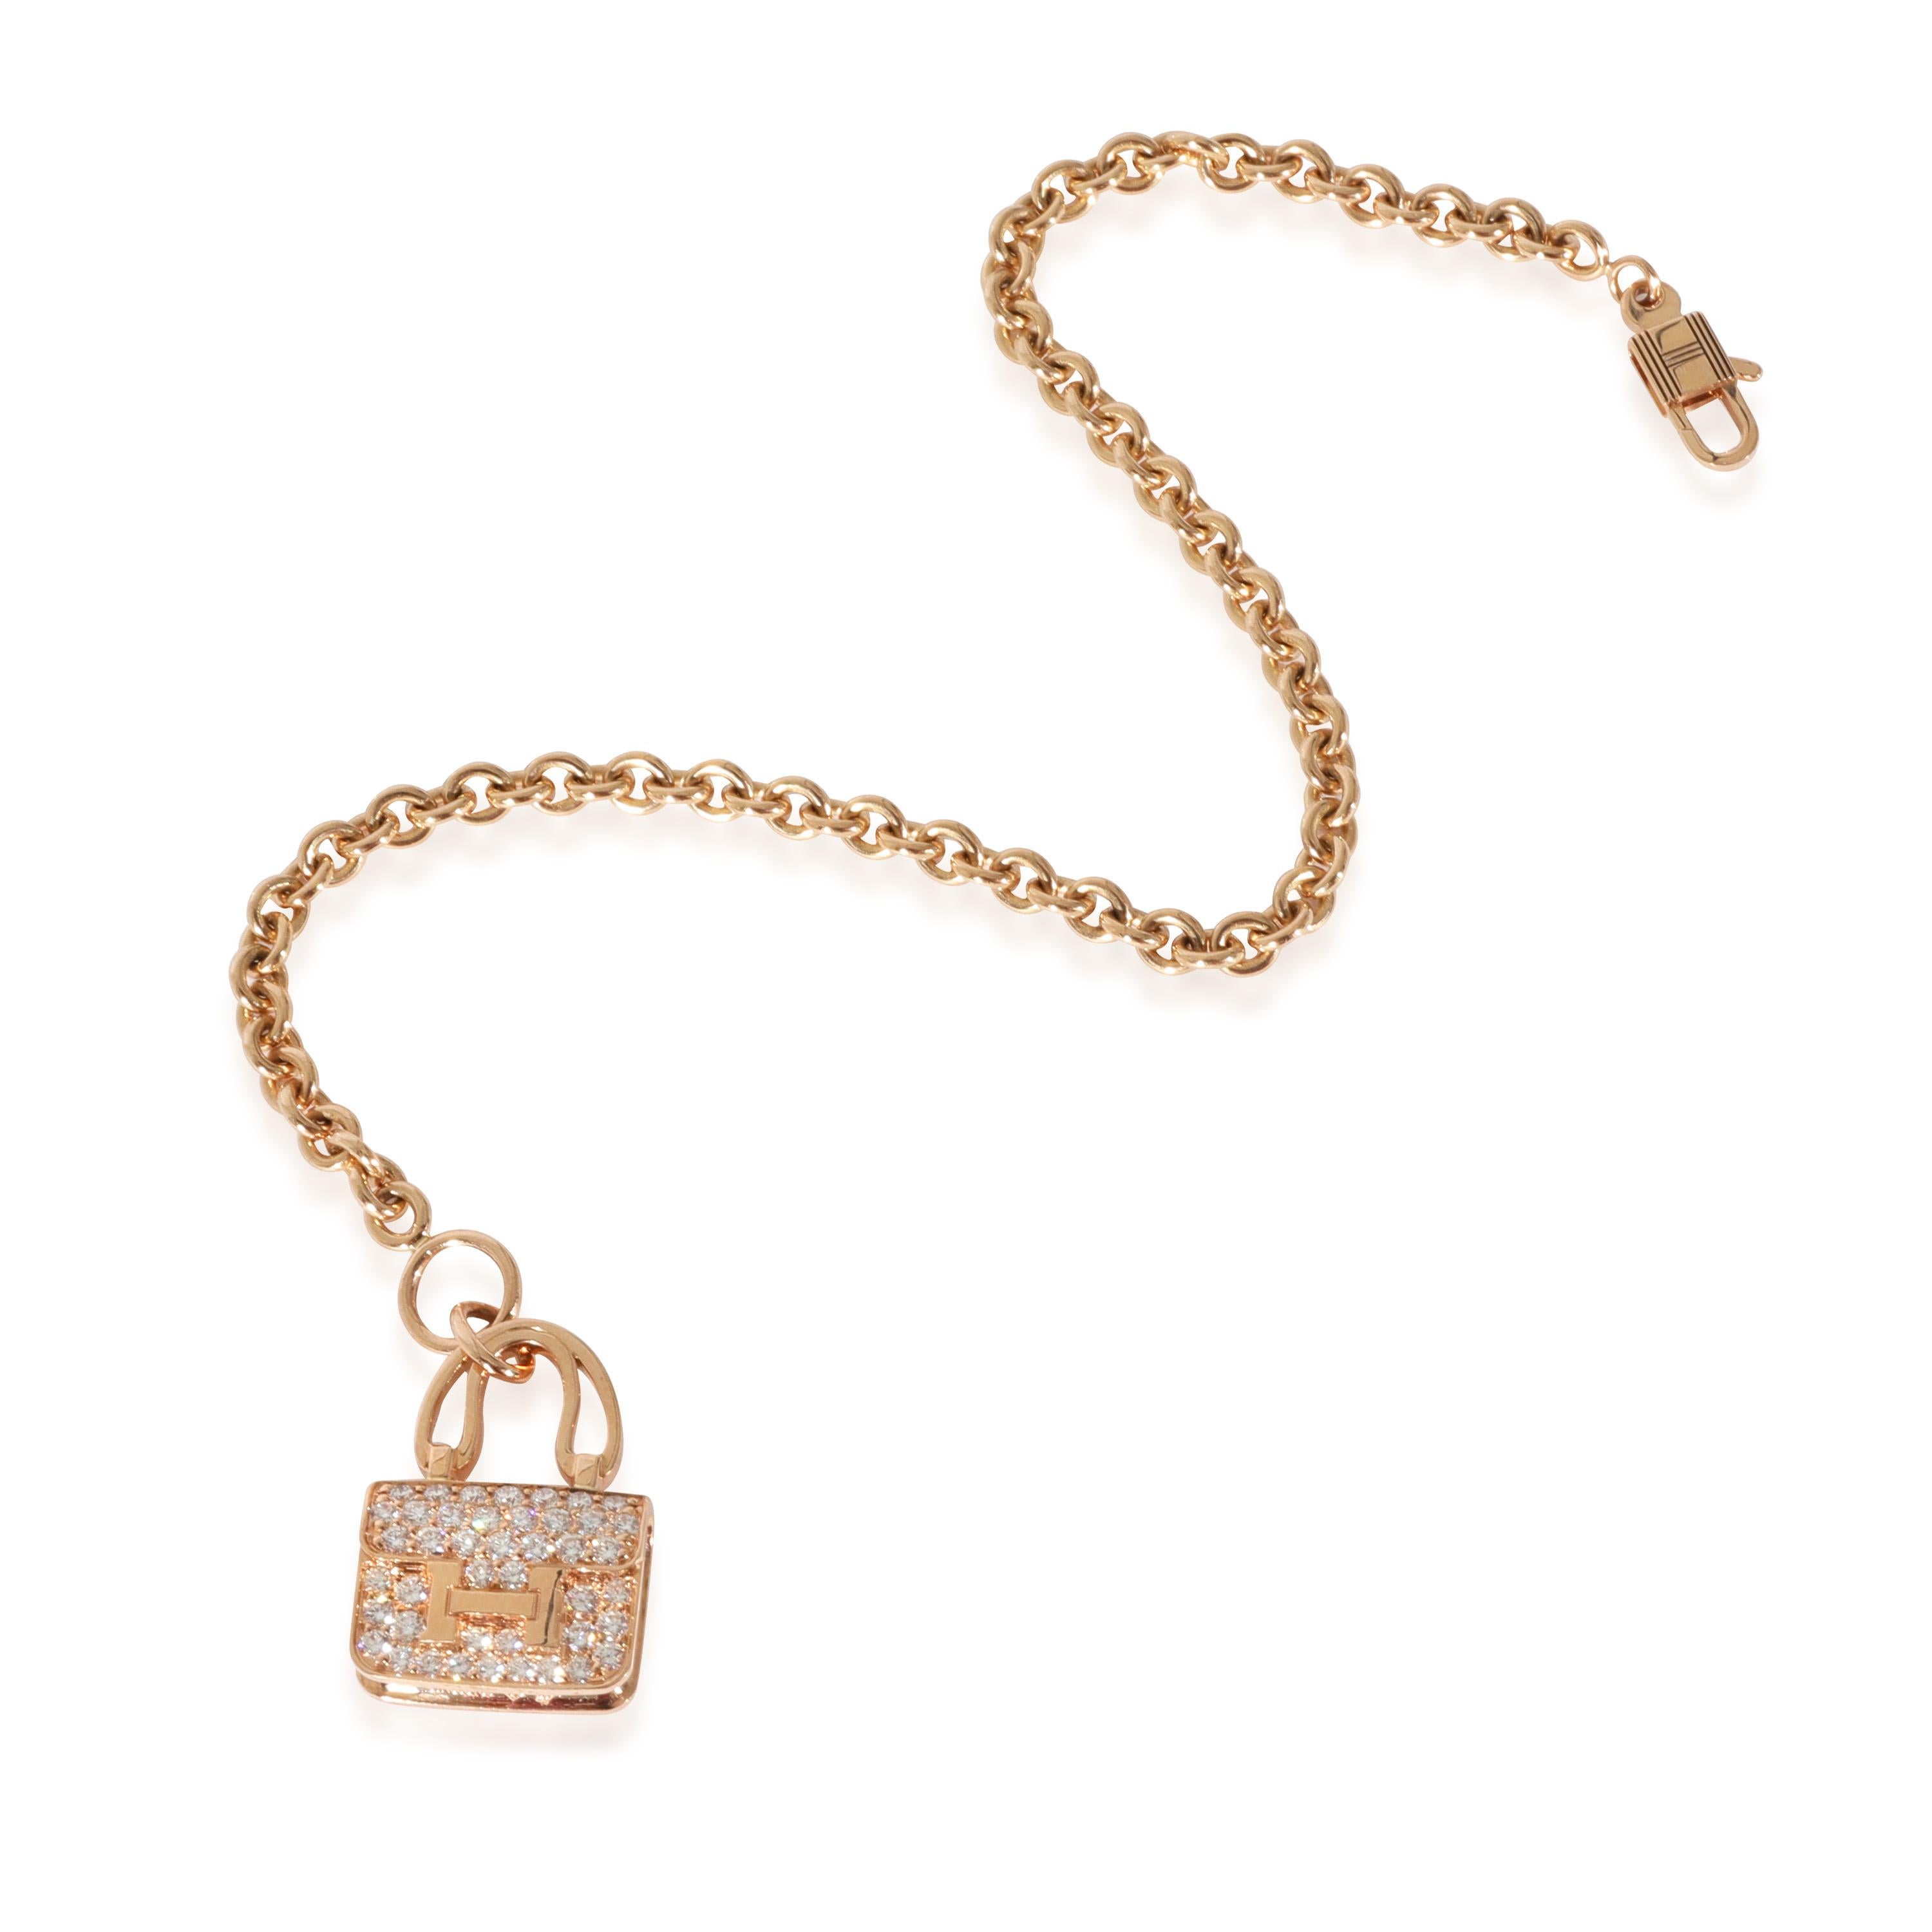 Hermès Amulettes Sammlung Diamant Armband in 18k Rose Gold 0,58 CTW im Angebot 1